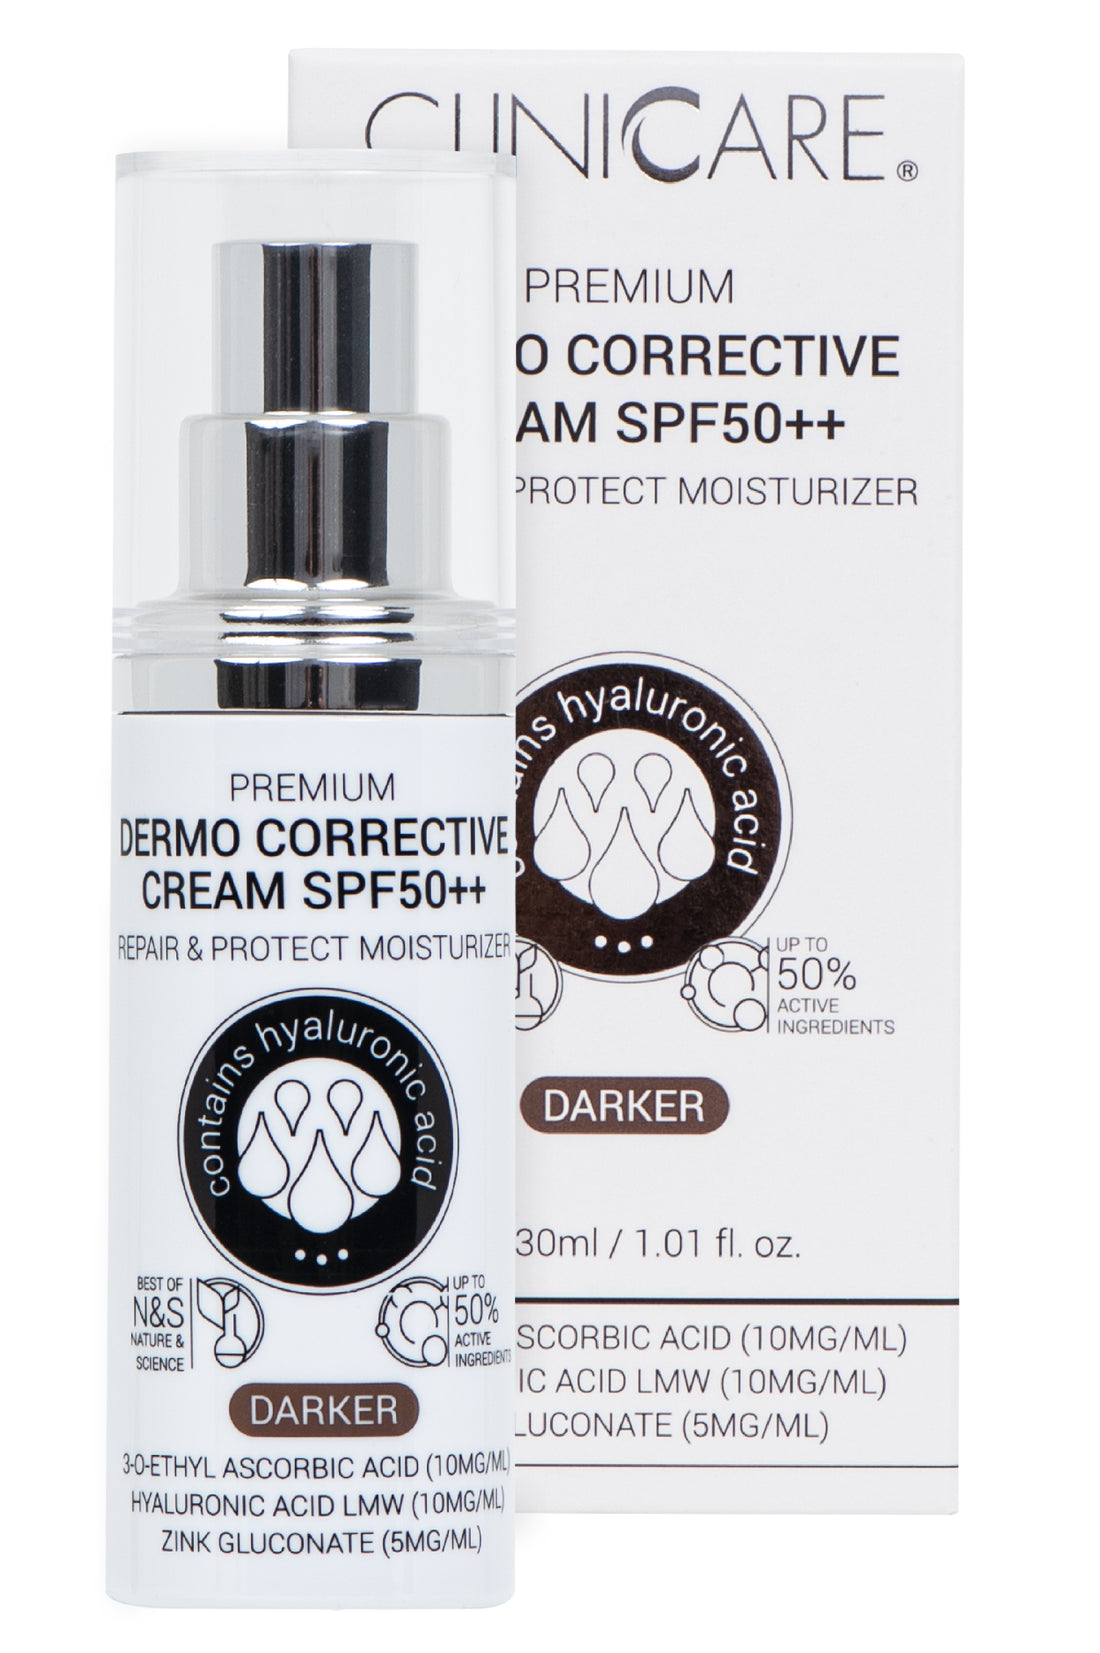 Premium Dermo Corrective Cream SPF50++ Darker 30ml